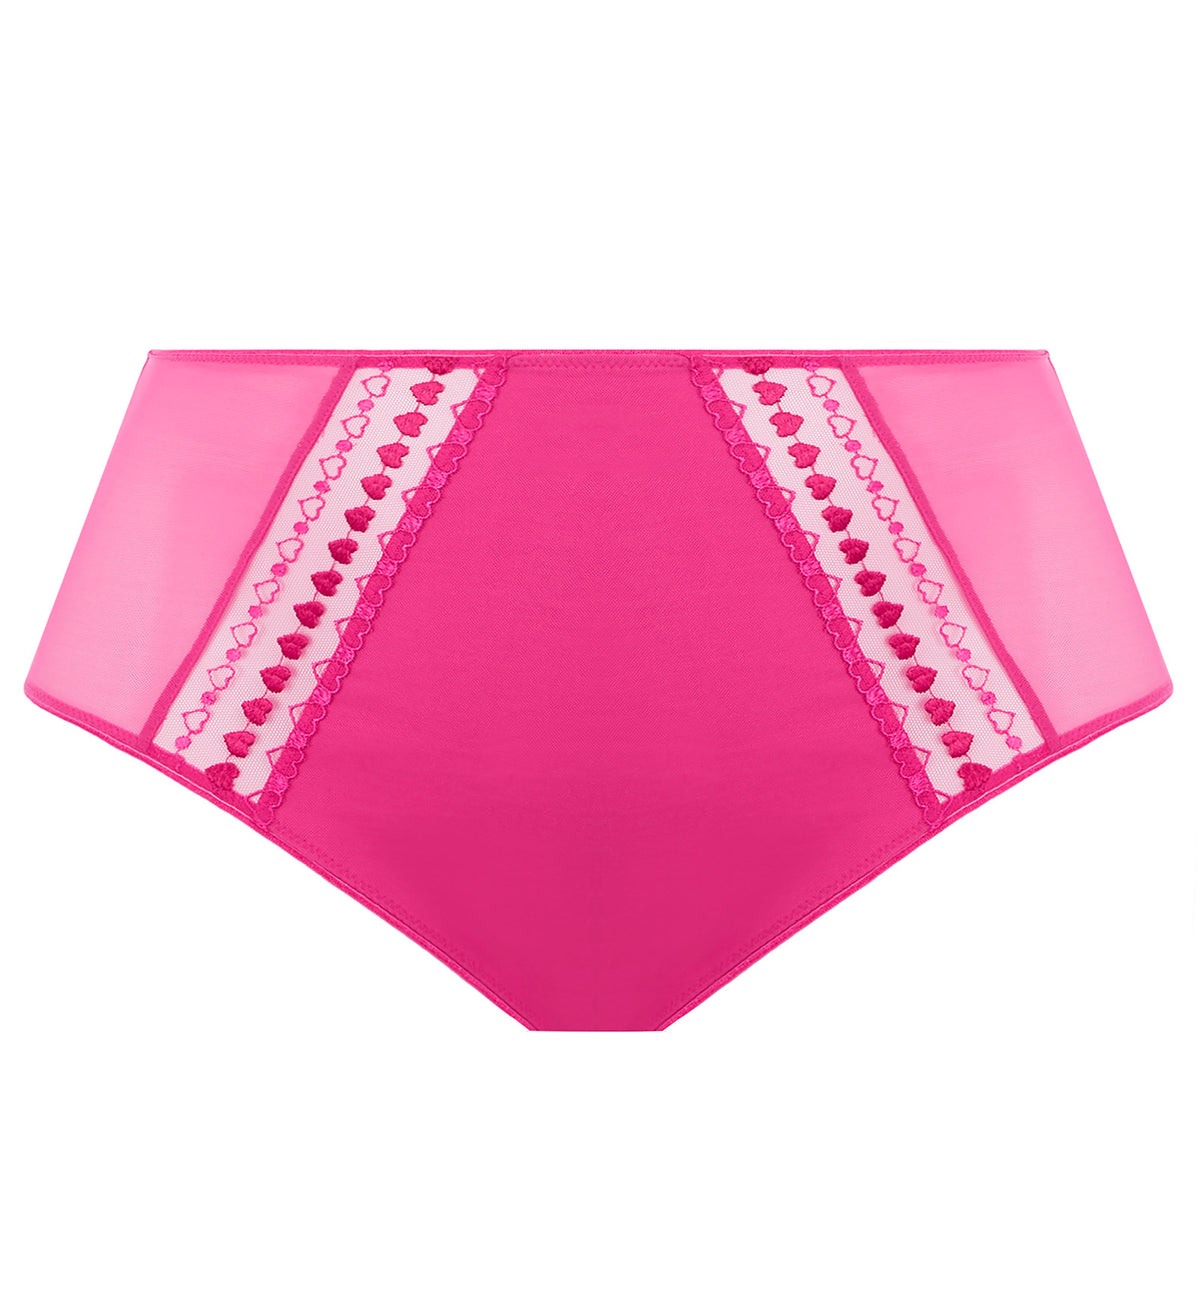 Elomi Matilda Matching Full Panty Brief (8906),Medium,Pink Kiss - Pink Kiss,Medium